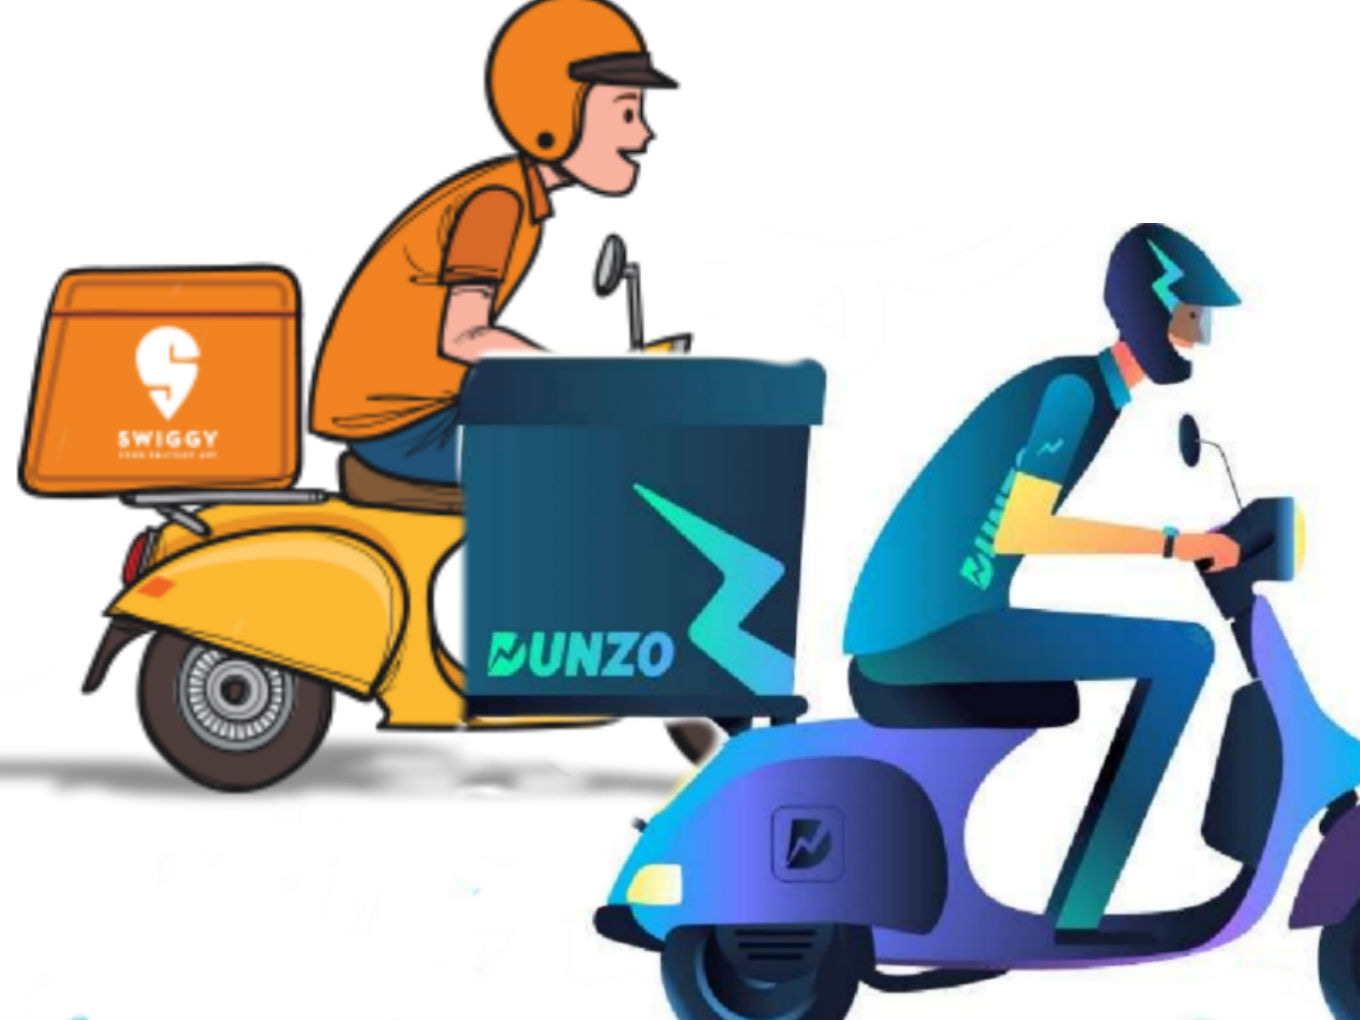 Swiggy Go Enters Dunzo's Market: Who Will Win The Hyperlocal Battle?